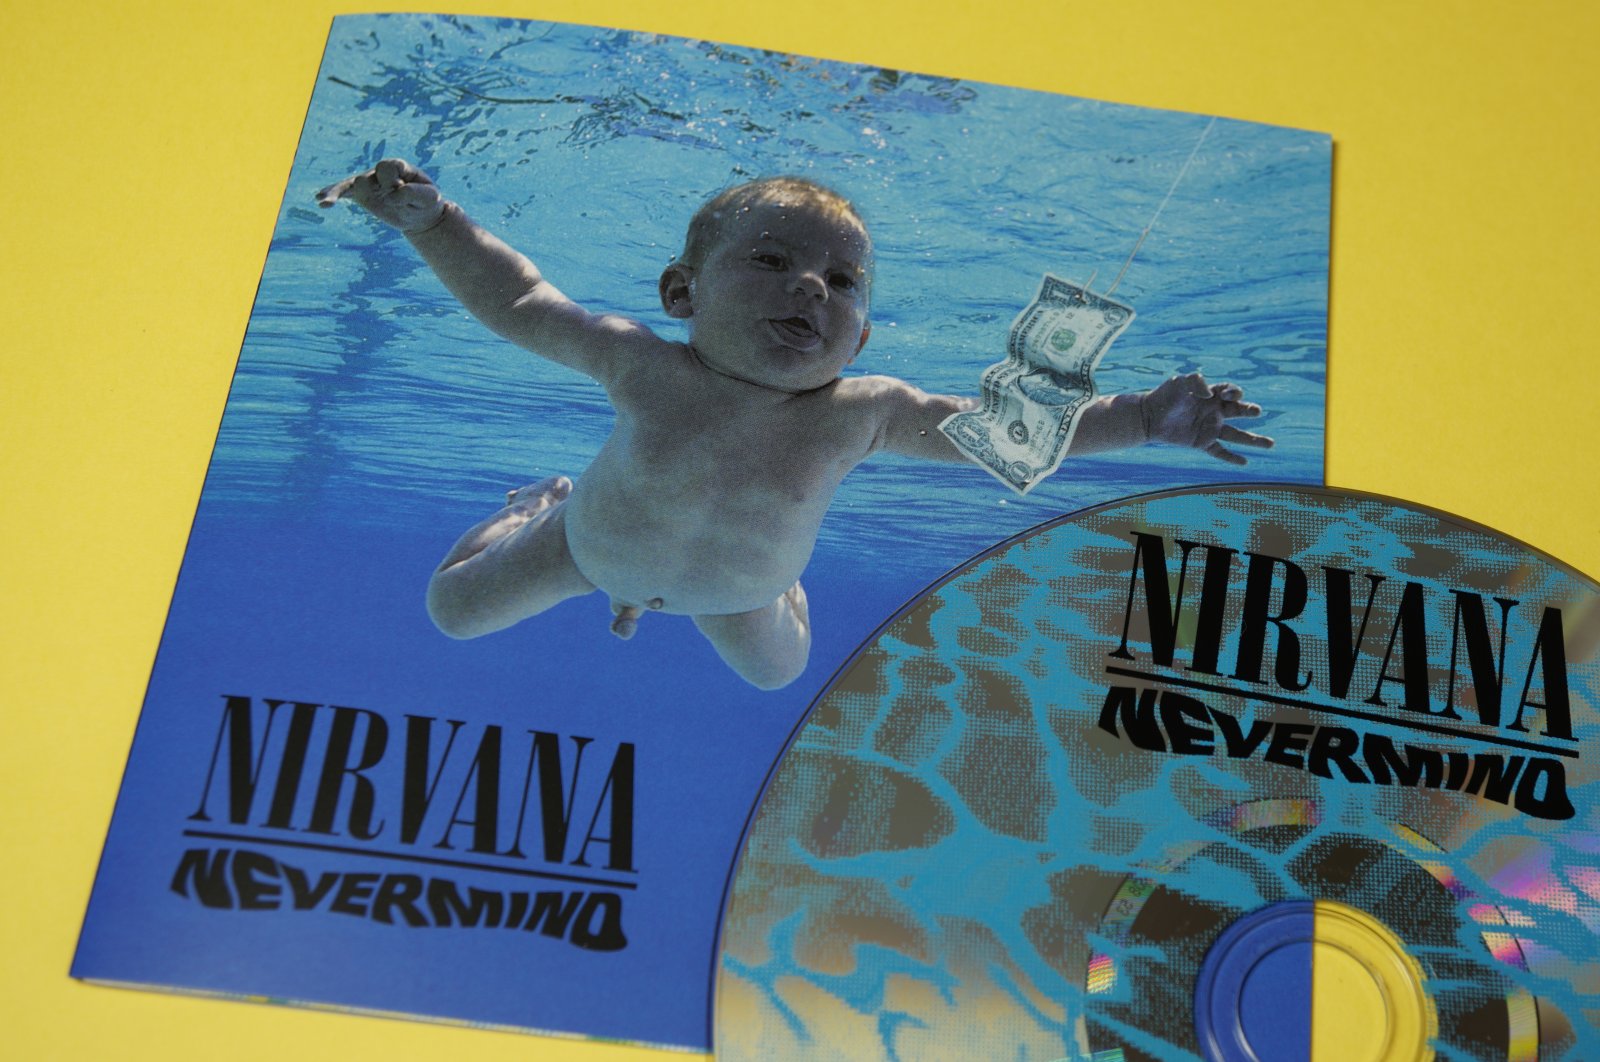 Bayi ‘Nevermind’ menghidupkan kembali gugatan terhadap Nirvana